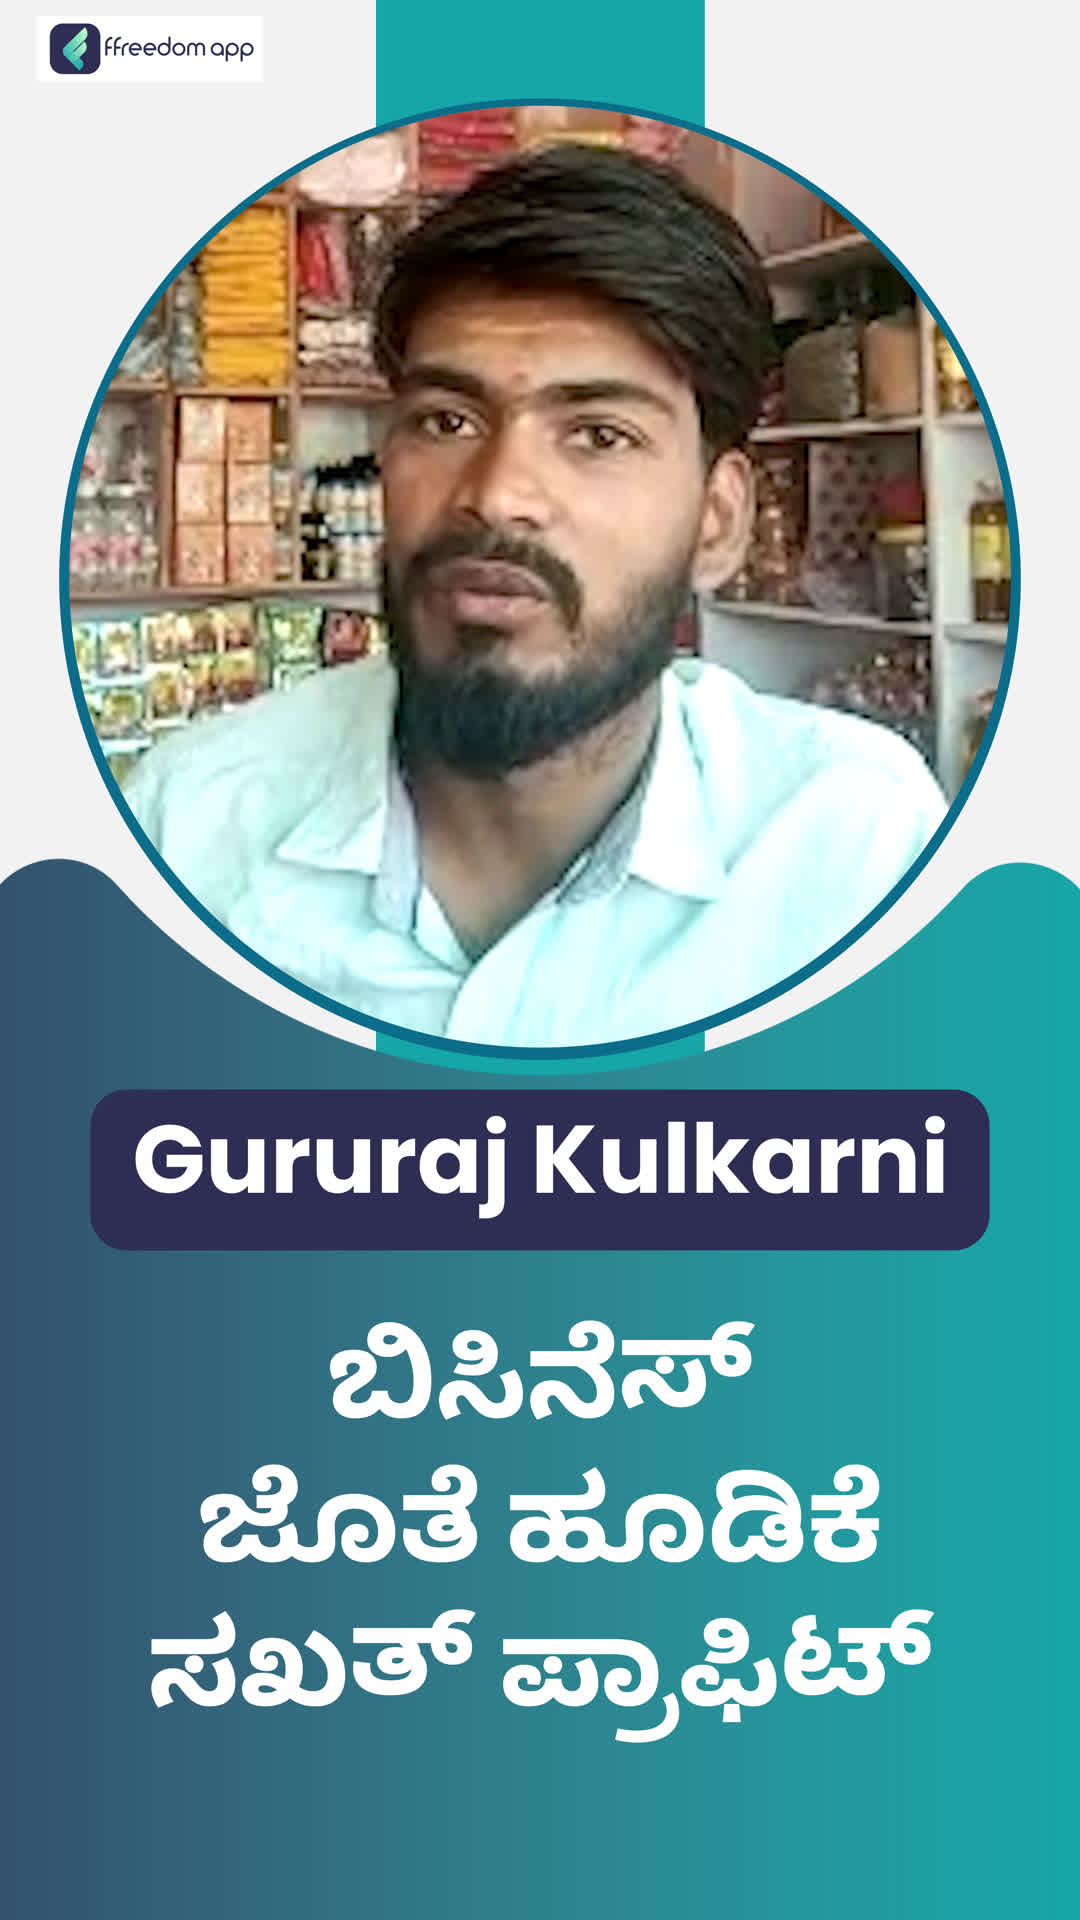 Gururaj's Honest Review of ffreedom app - Vijayapura ,Karnataka